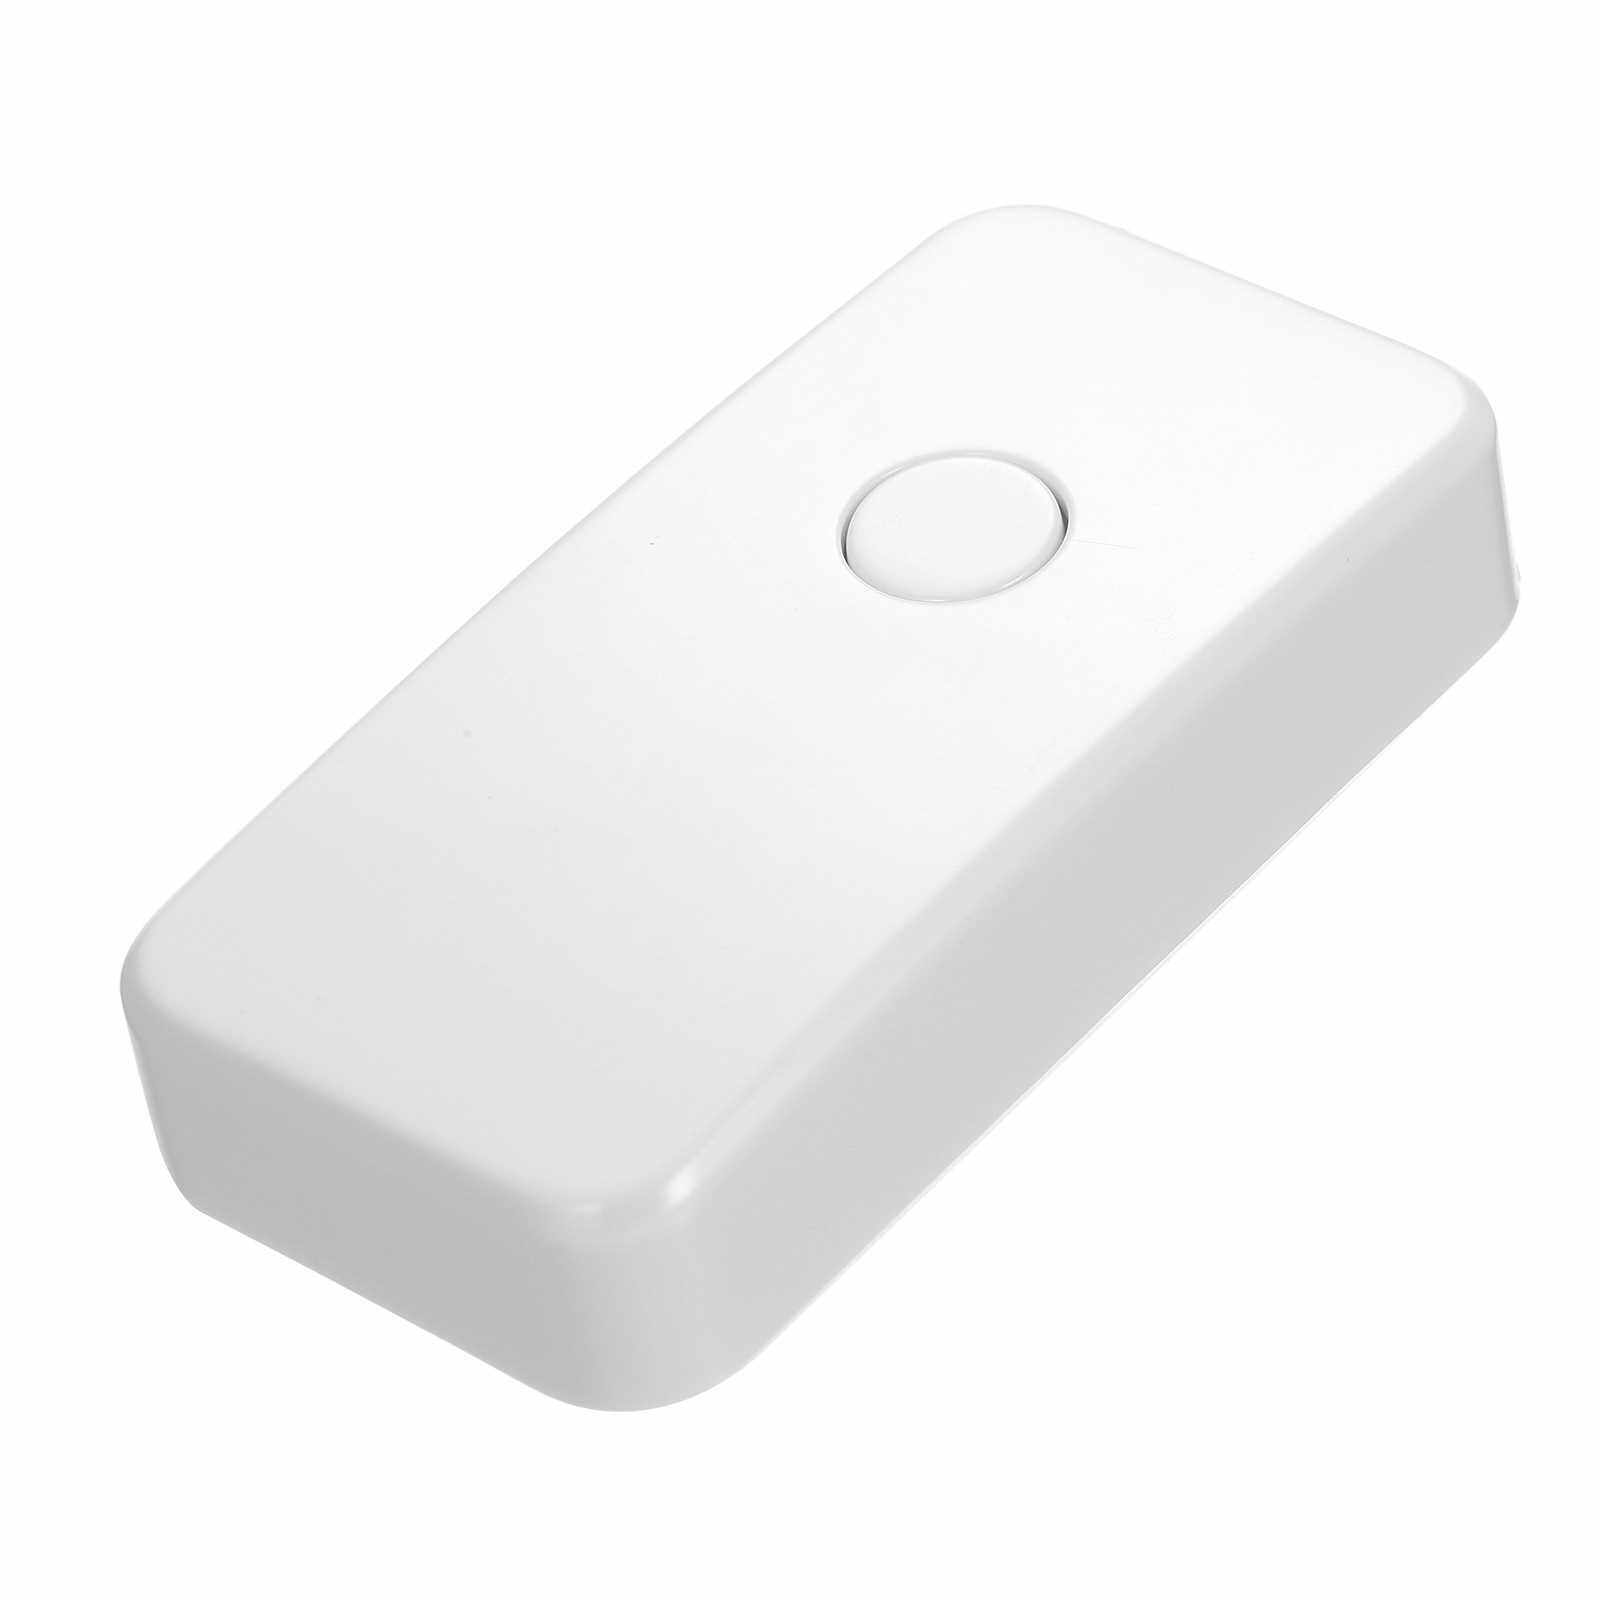 eWeLink Wireless Smart Vibration Detector Anti Lost Warning Shock Door Window Sensor Anti-theft Alarm Home Security Alarm System (Standard)